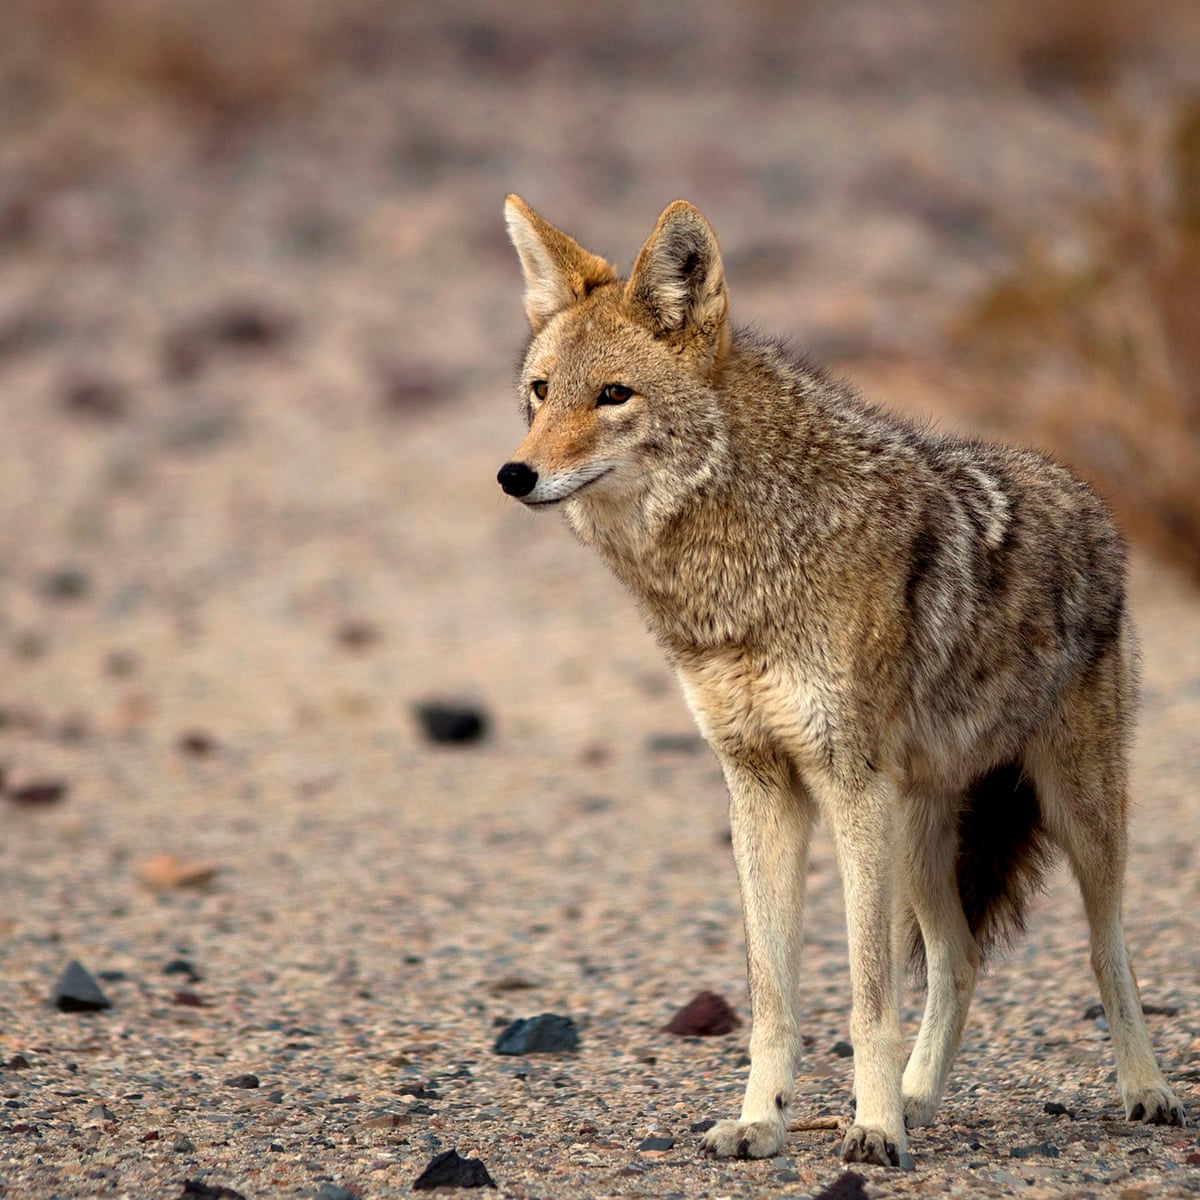 Iowa man tries to regain custody of lost emotional support coyote